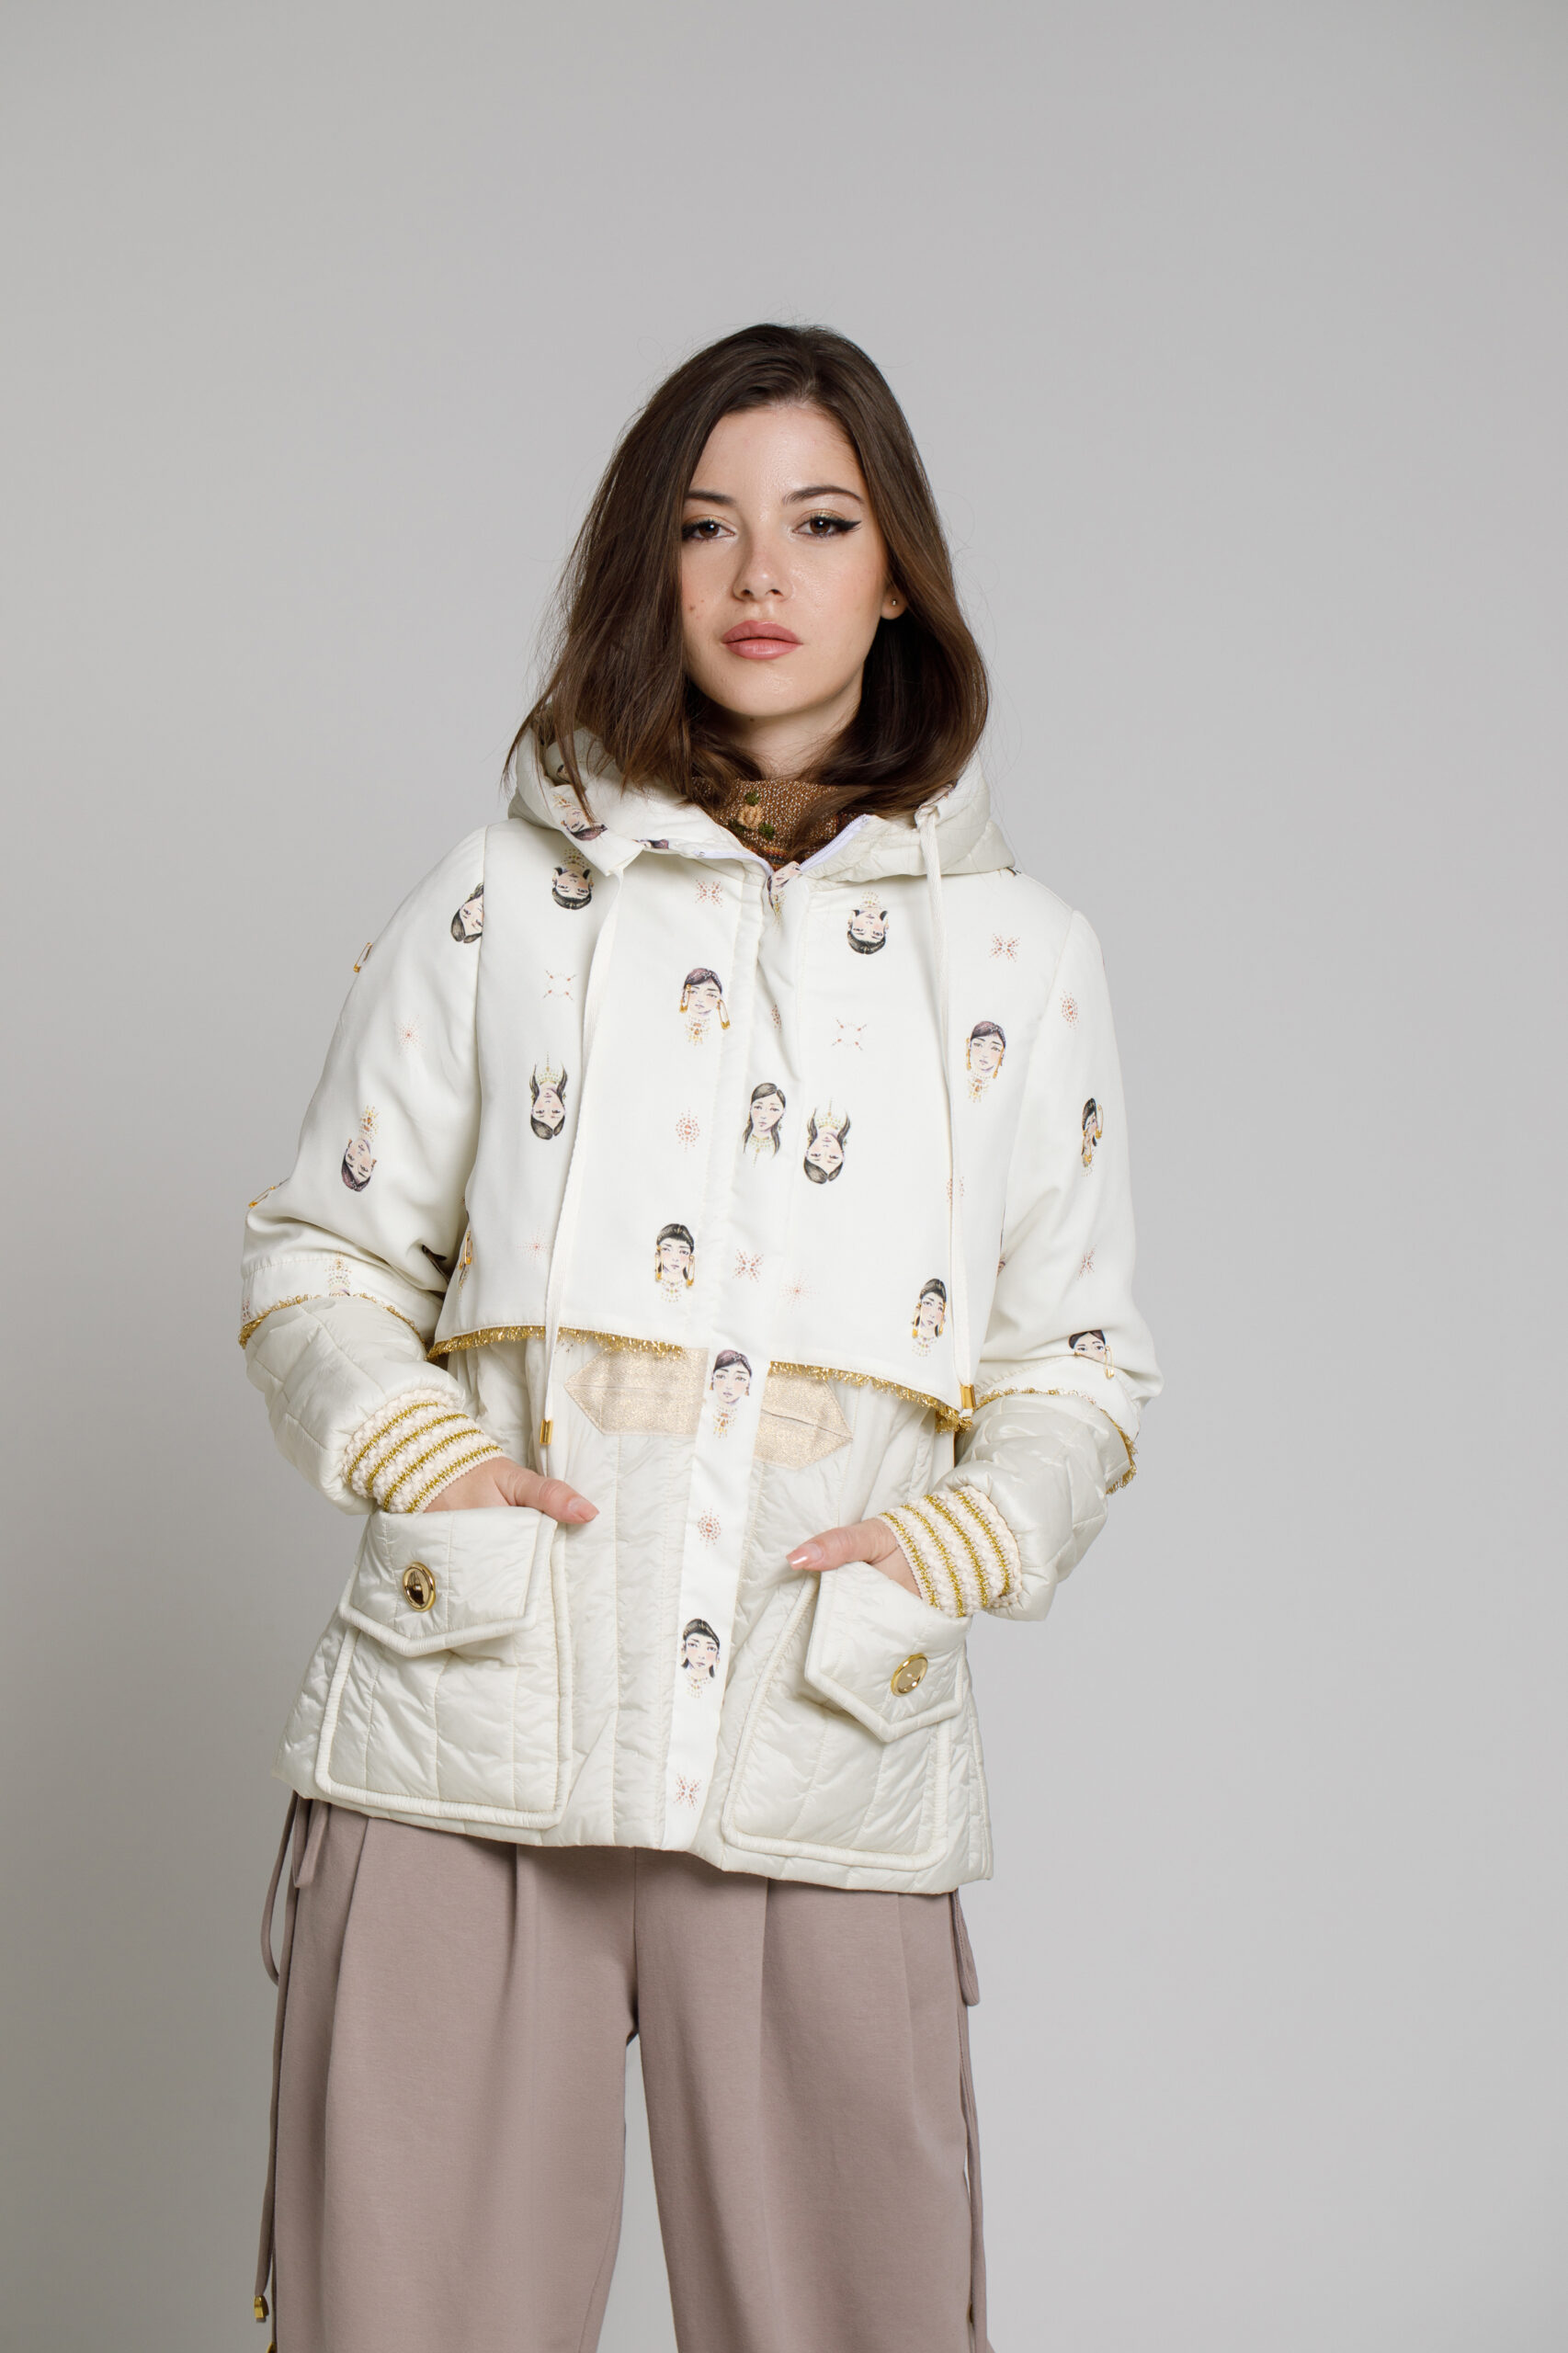 GALATEA cream quilted jacket. Natural fabrics, original design, handmade embroidery